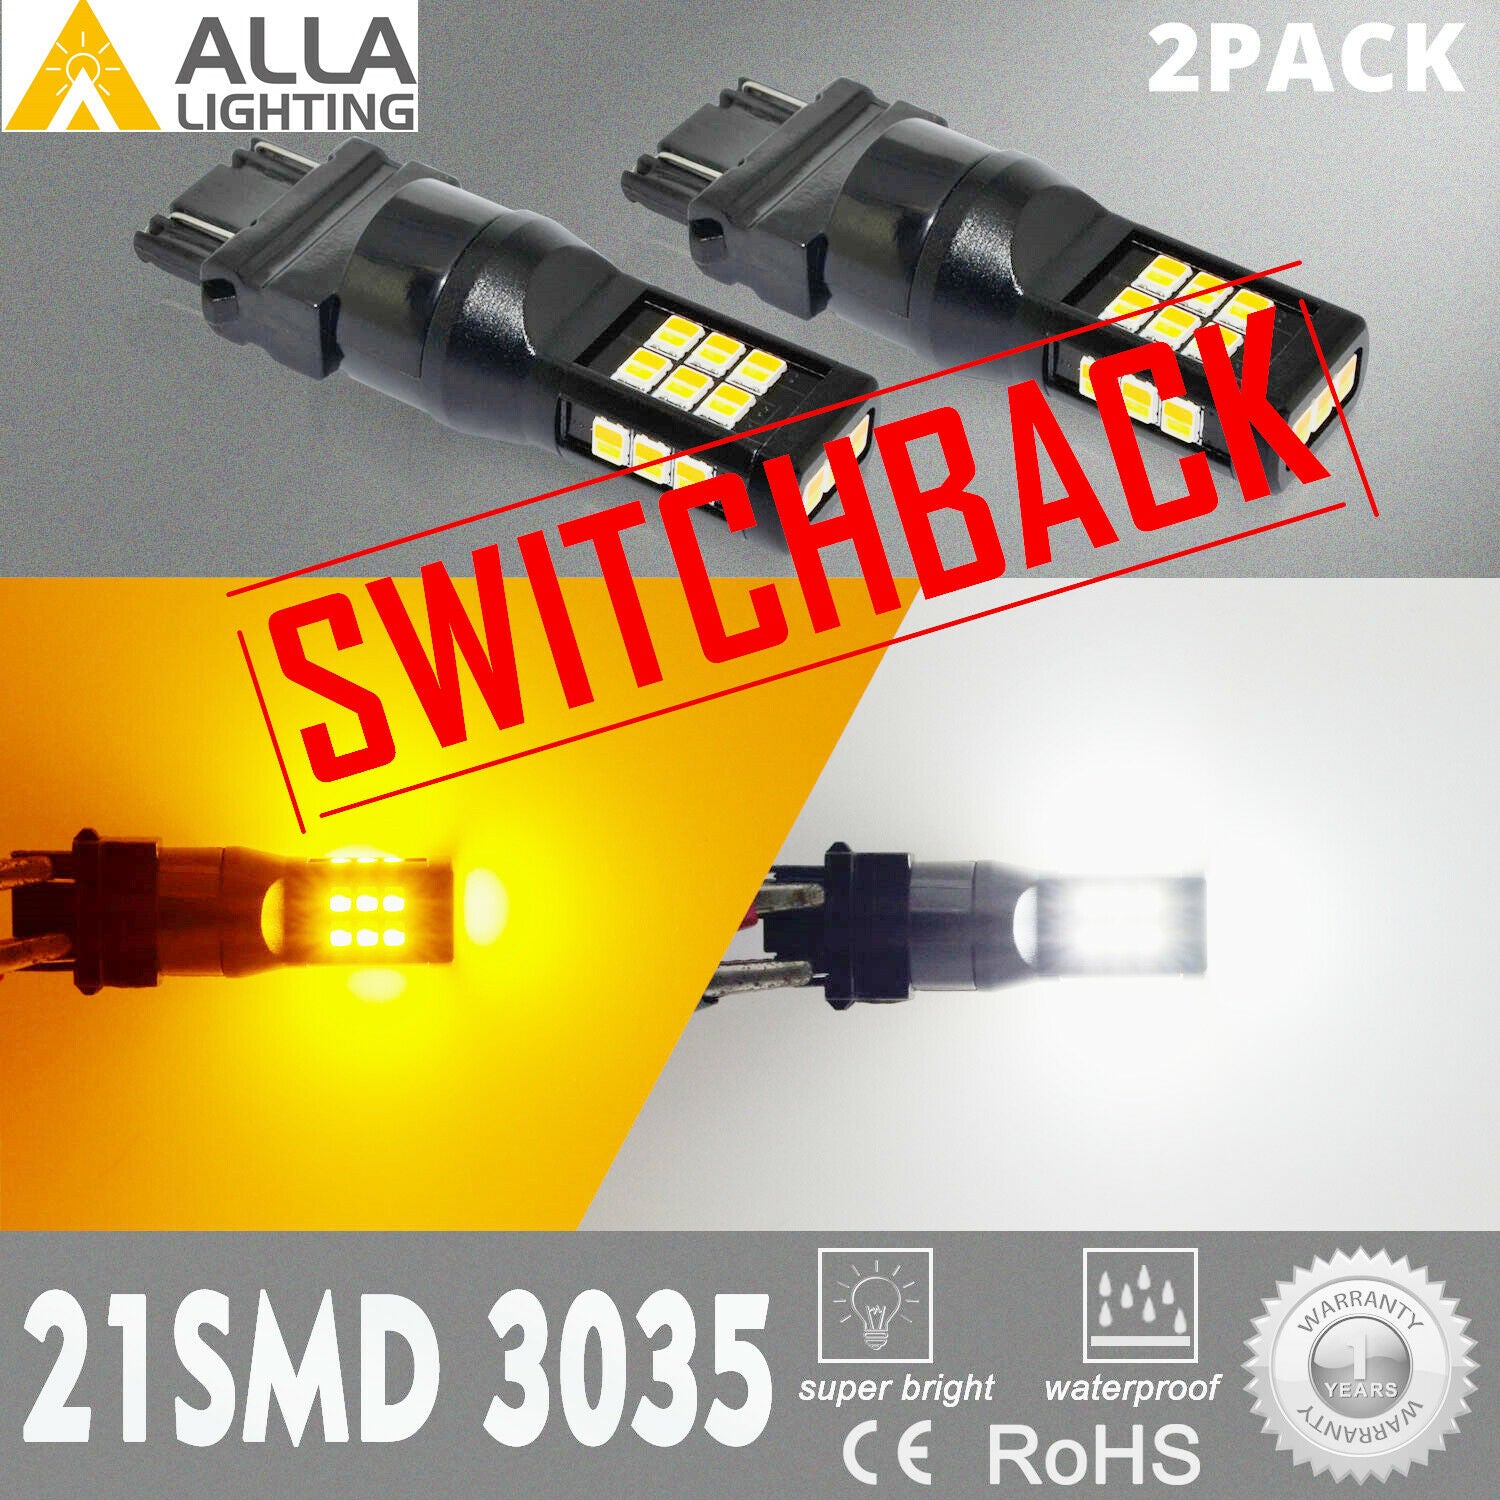 LED 2-Color Turn Signal Bulbs For 2007-2009 Toyota Camry CE LE XL,Flashback Lamp